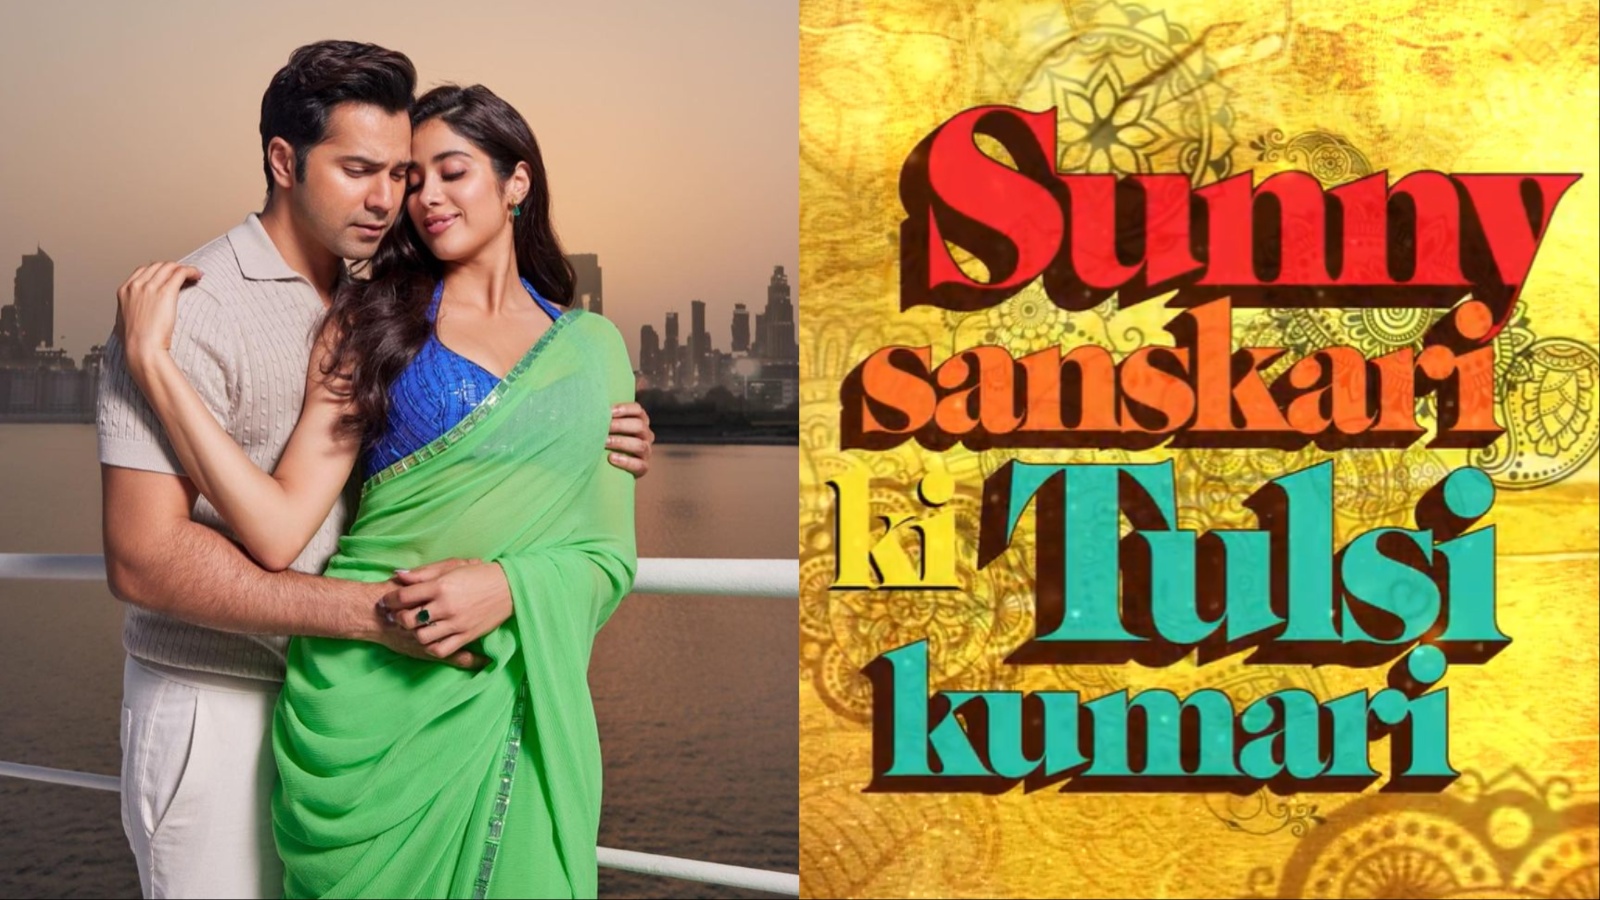 Dulhania 3, Janhvi Kapoor to Replace Alia Bhatt and Join Varun Dhawan in 'Sunny Sanskari Ki Tulsi Kumari'"